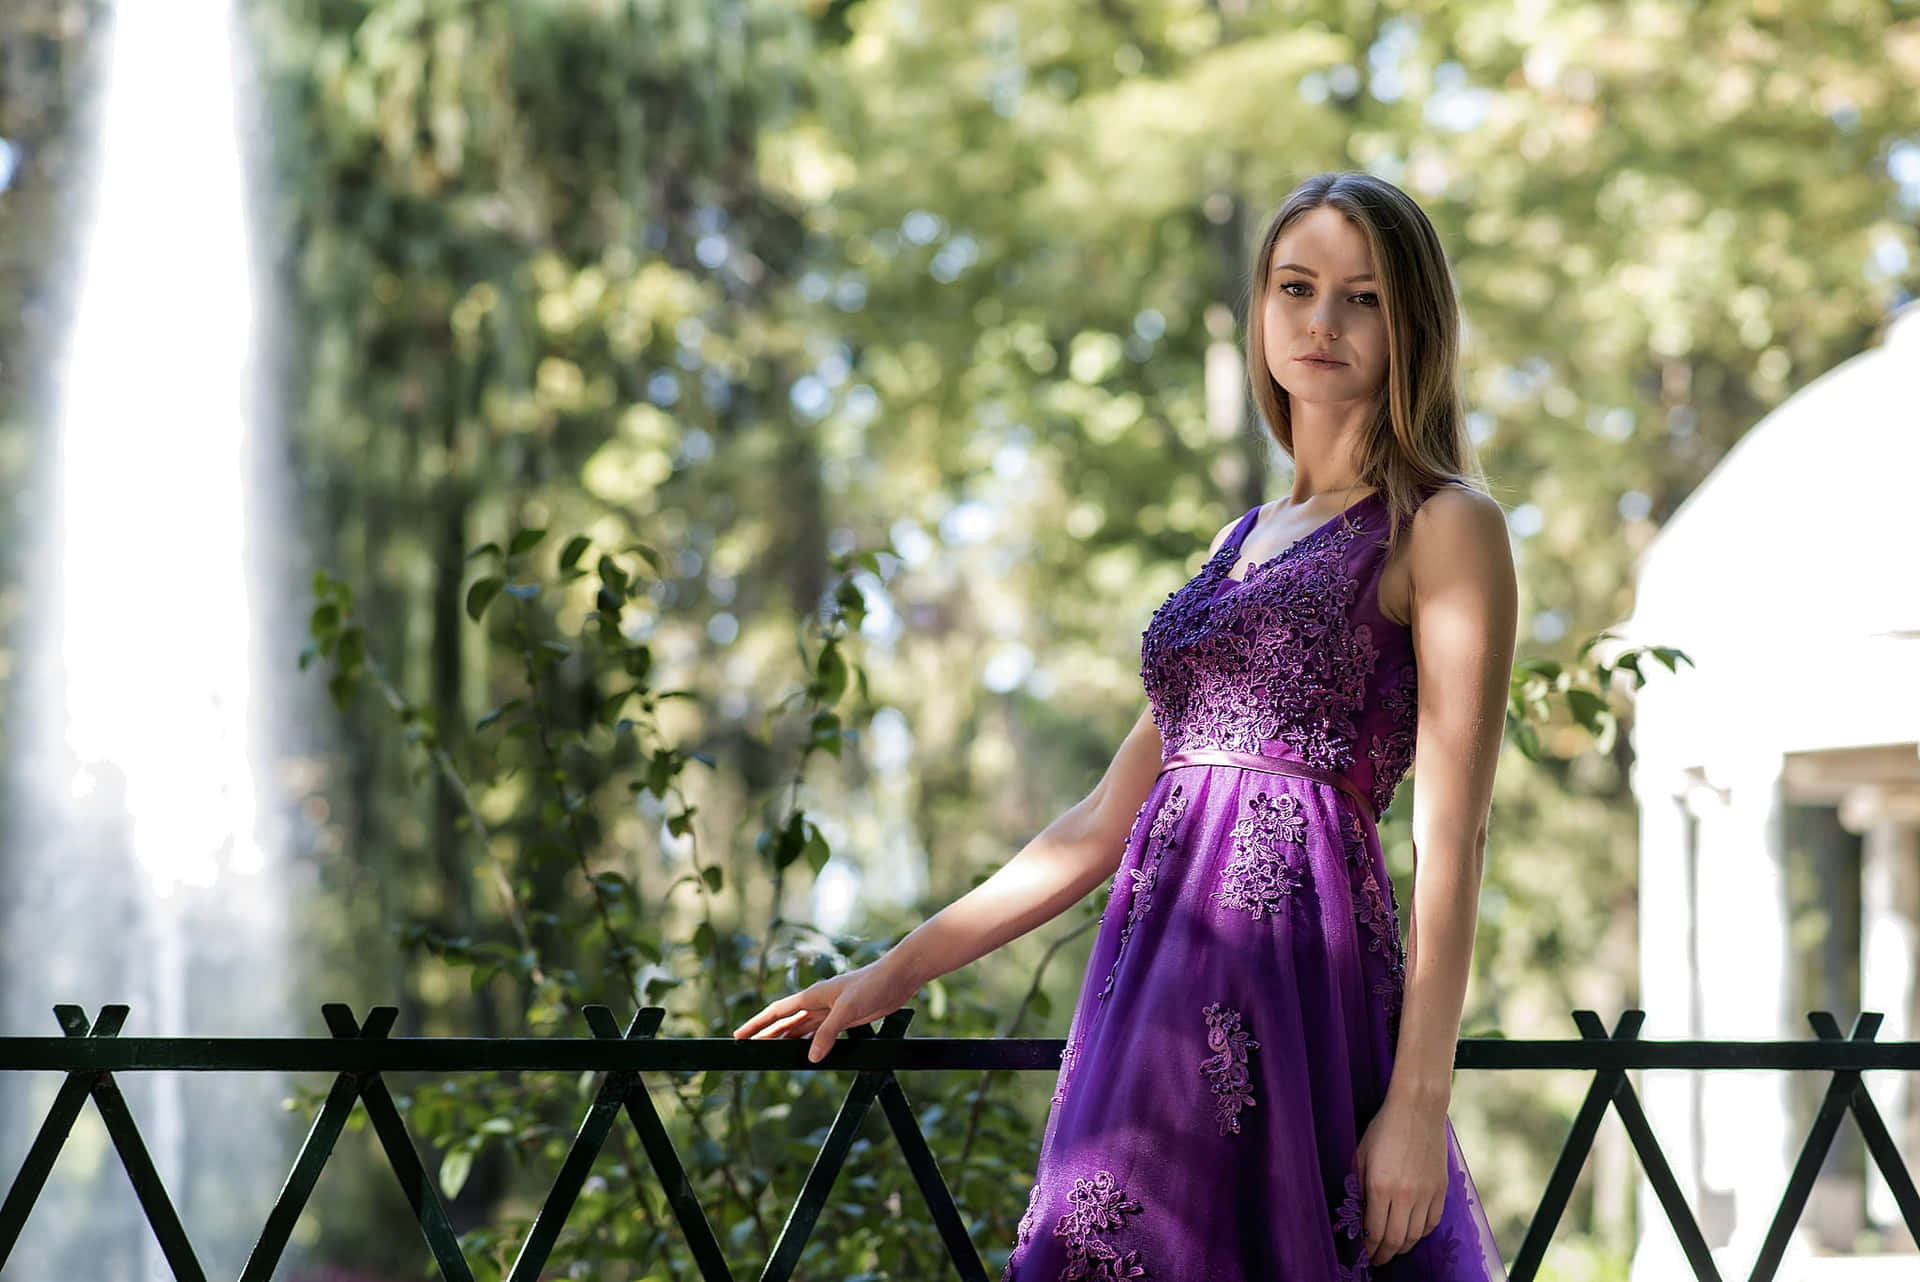 A Dreamy Purple Dress To Steal The Spotlight" Wallpaper